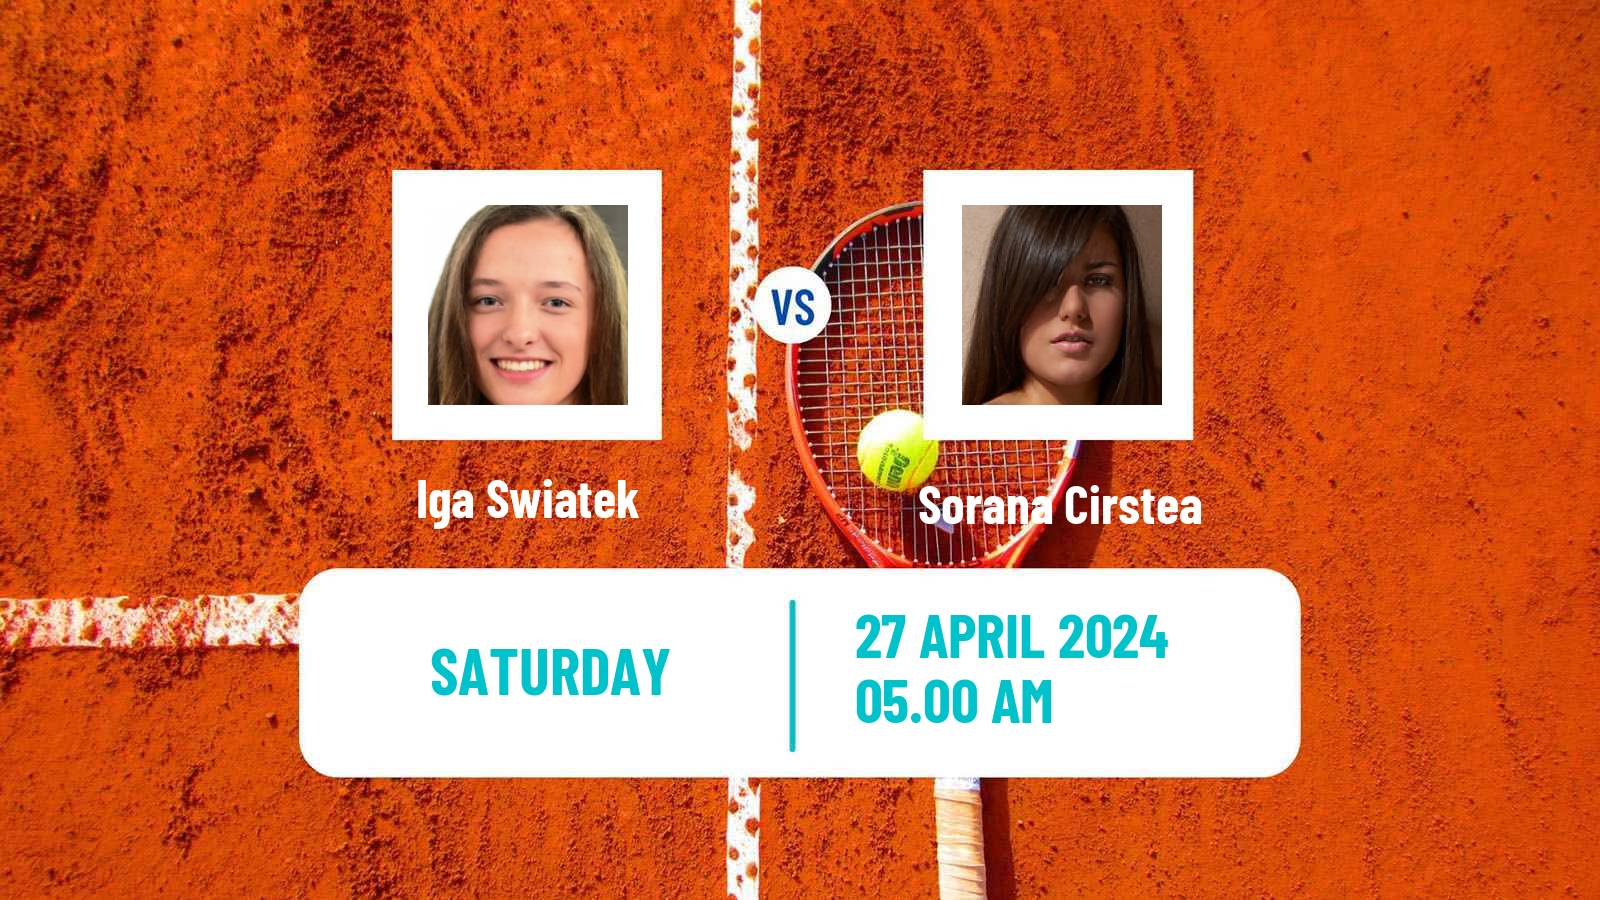 Tennis WTA Madrid Iga Swiatek - Sorana Cirstea